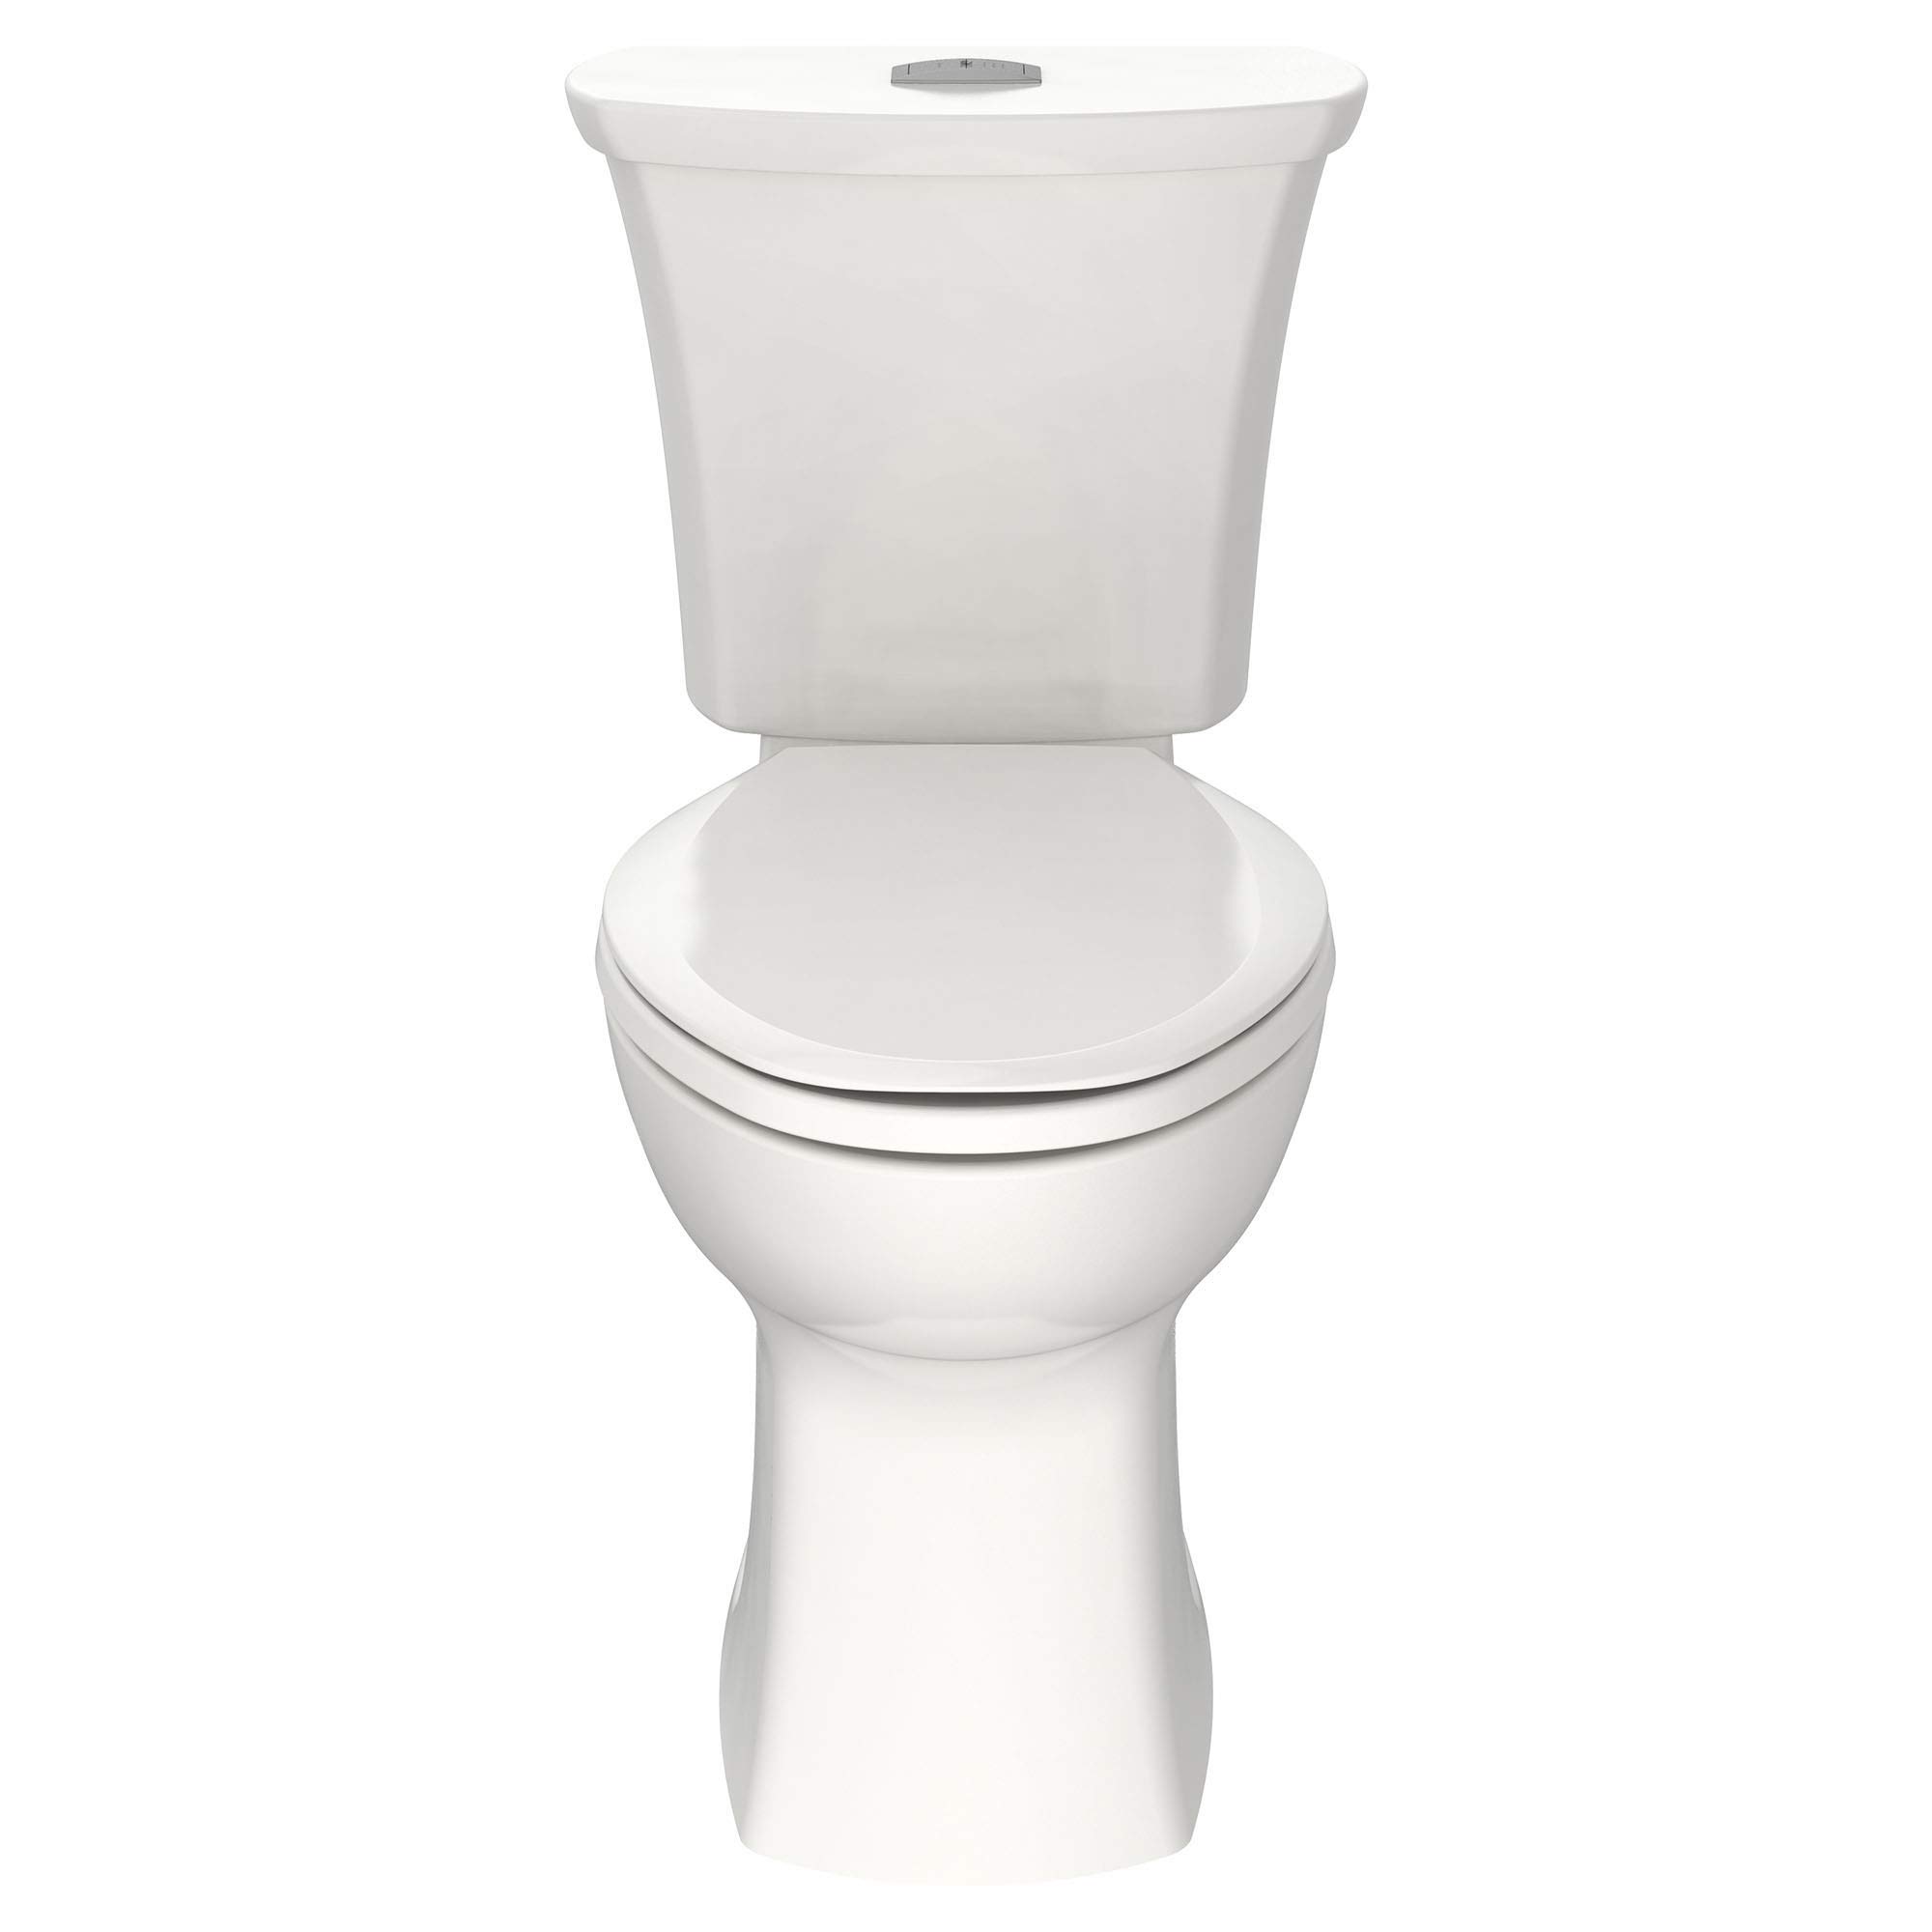 American Standard Edgemere Dual Flush Toilet